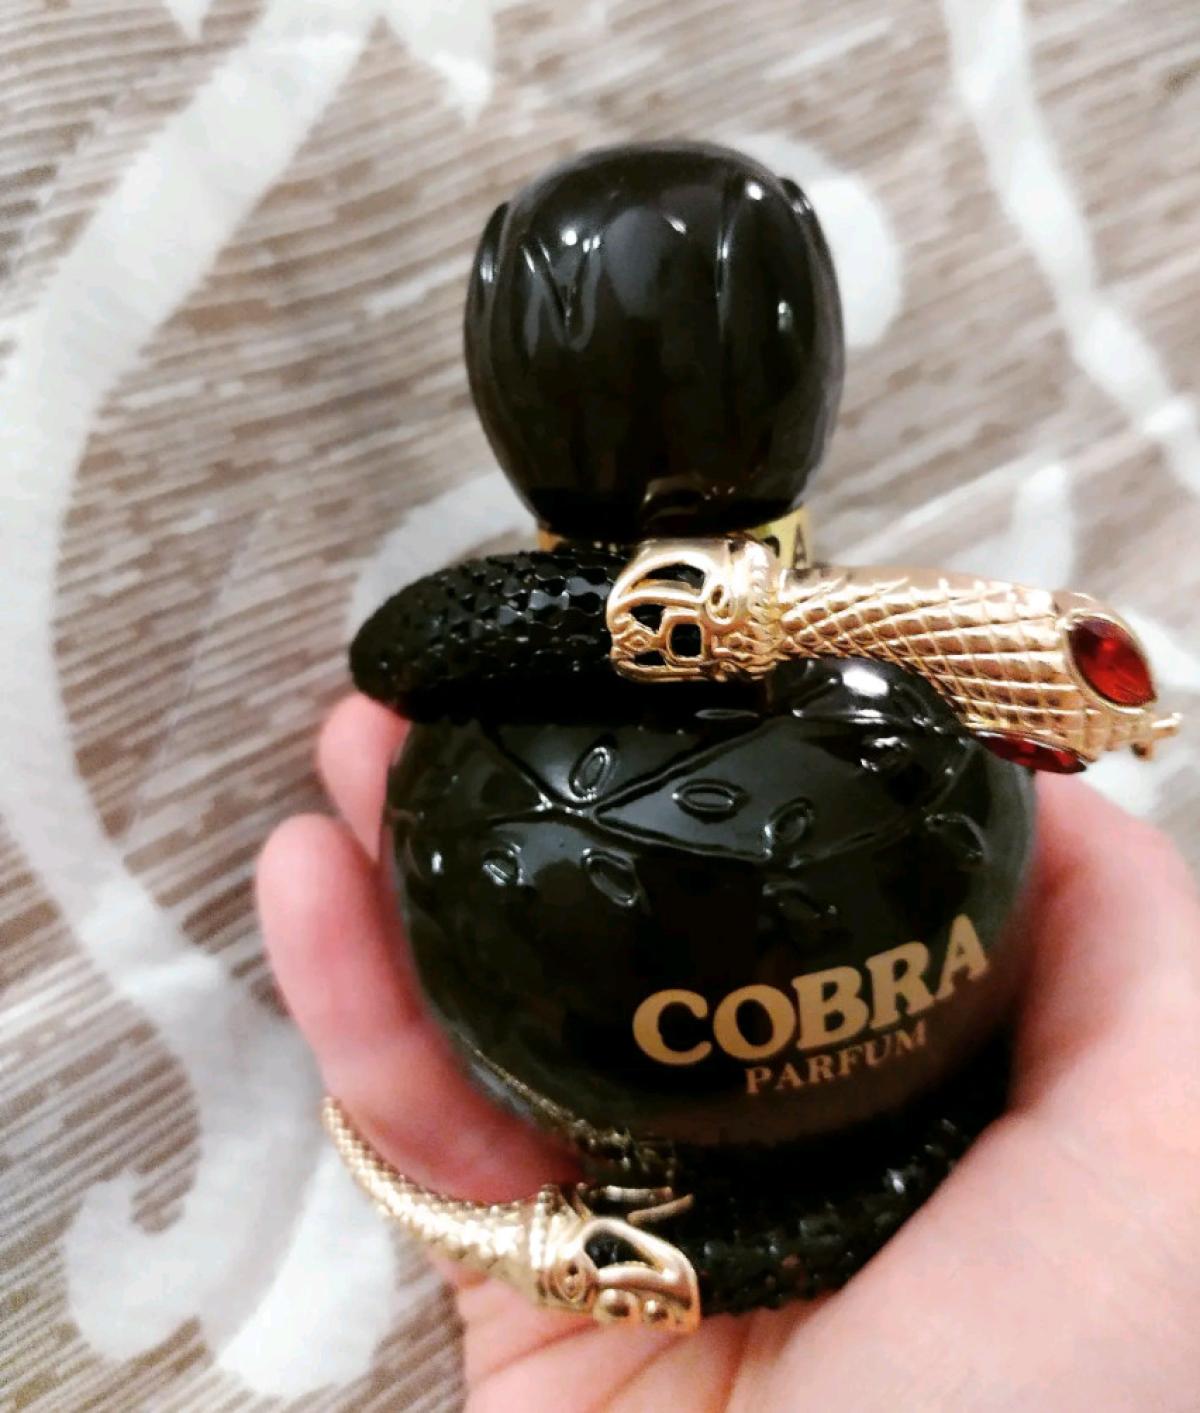 Cobra Jeanne Arthes perfume - a fragrance for women